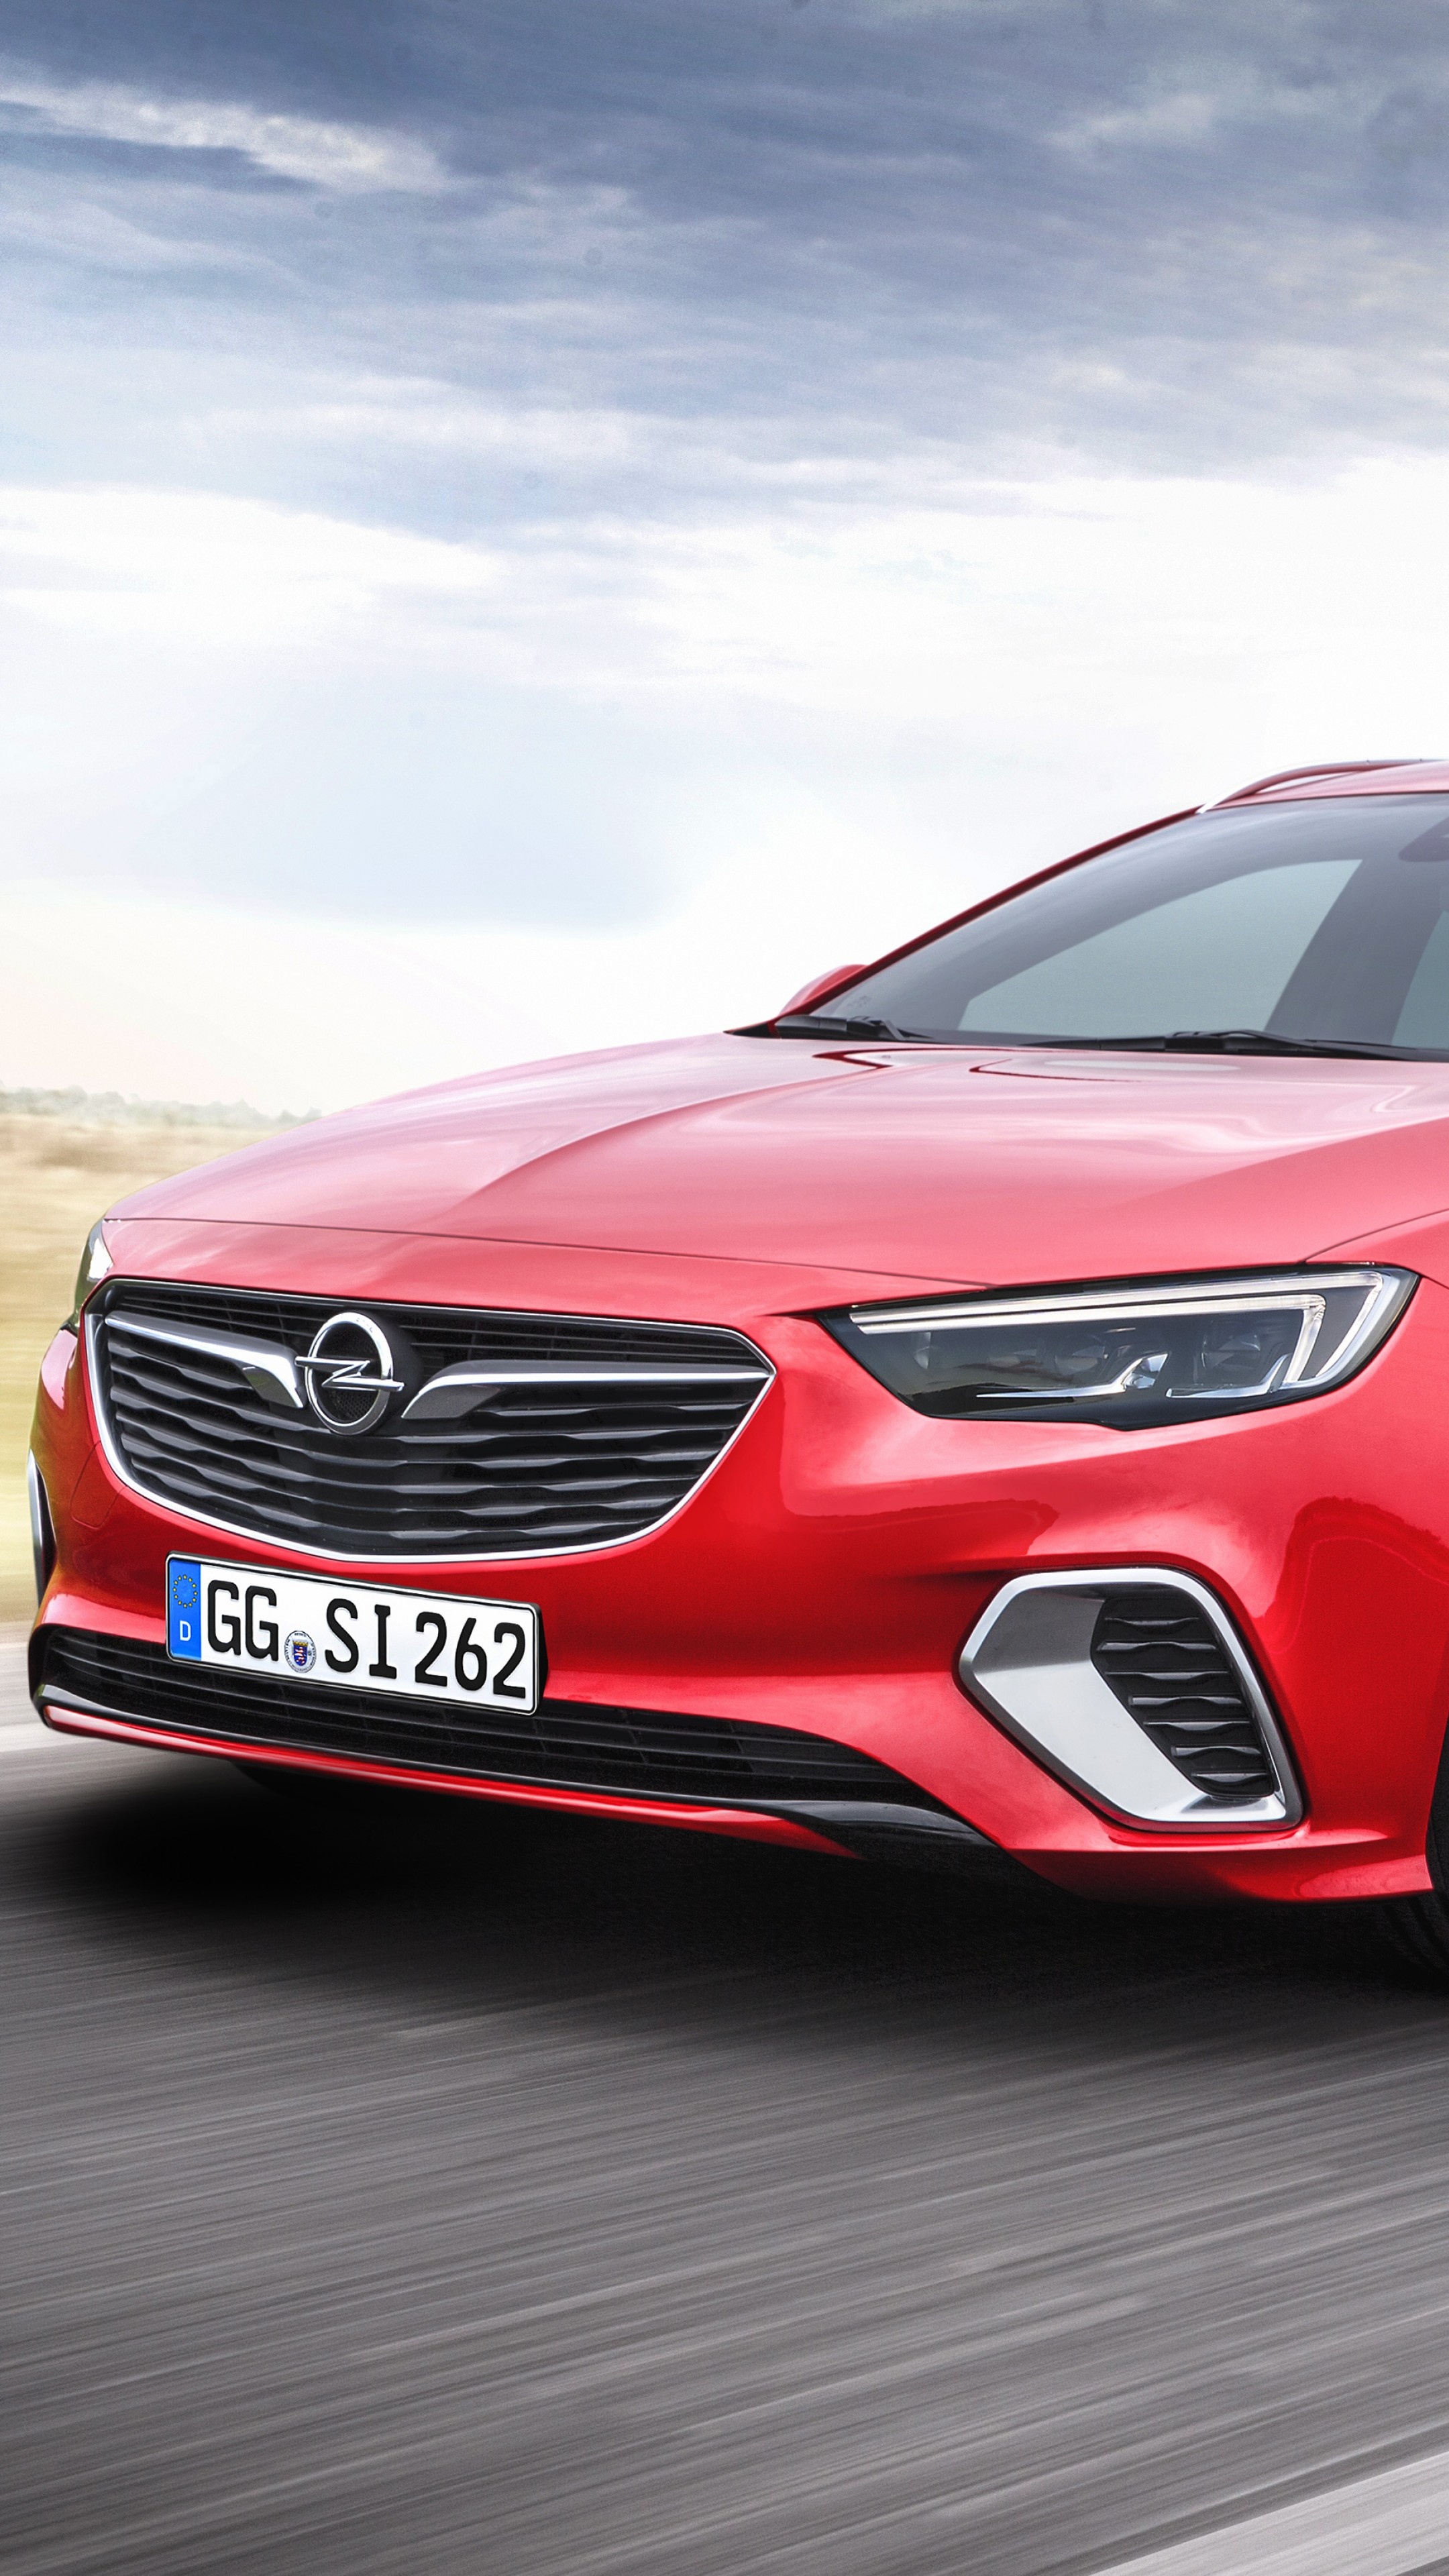 Opel Insignia GSI, Powerful sedan, Stylish design, Impressive features, 2160x3840 4K Handy